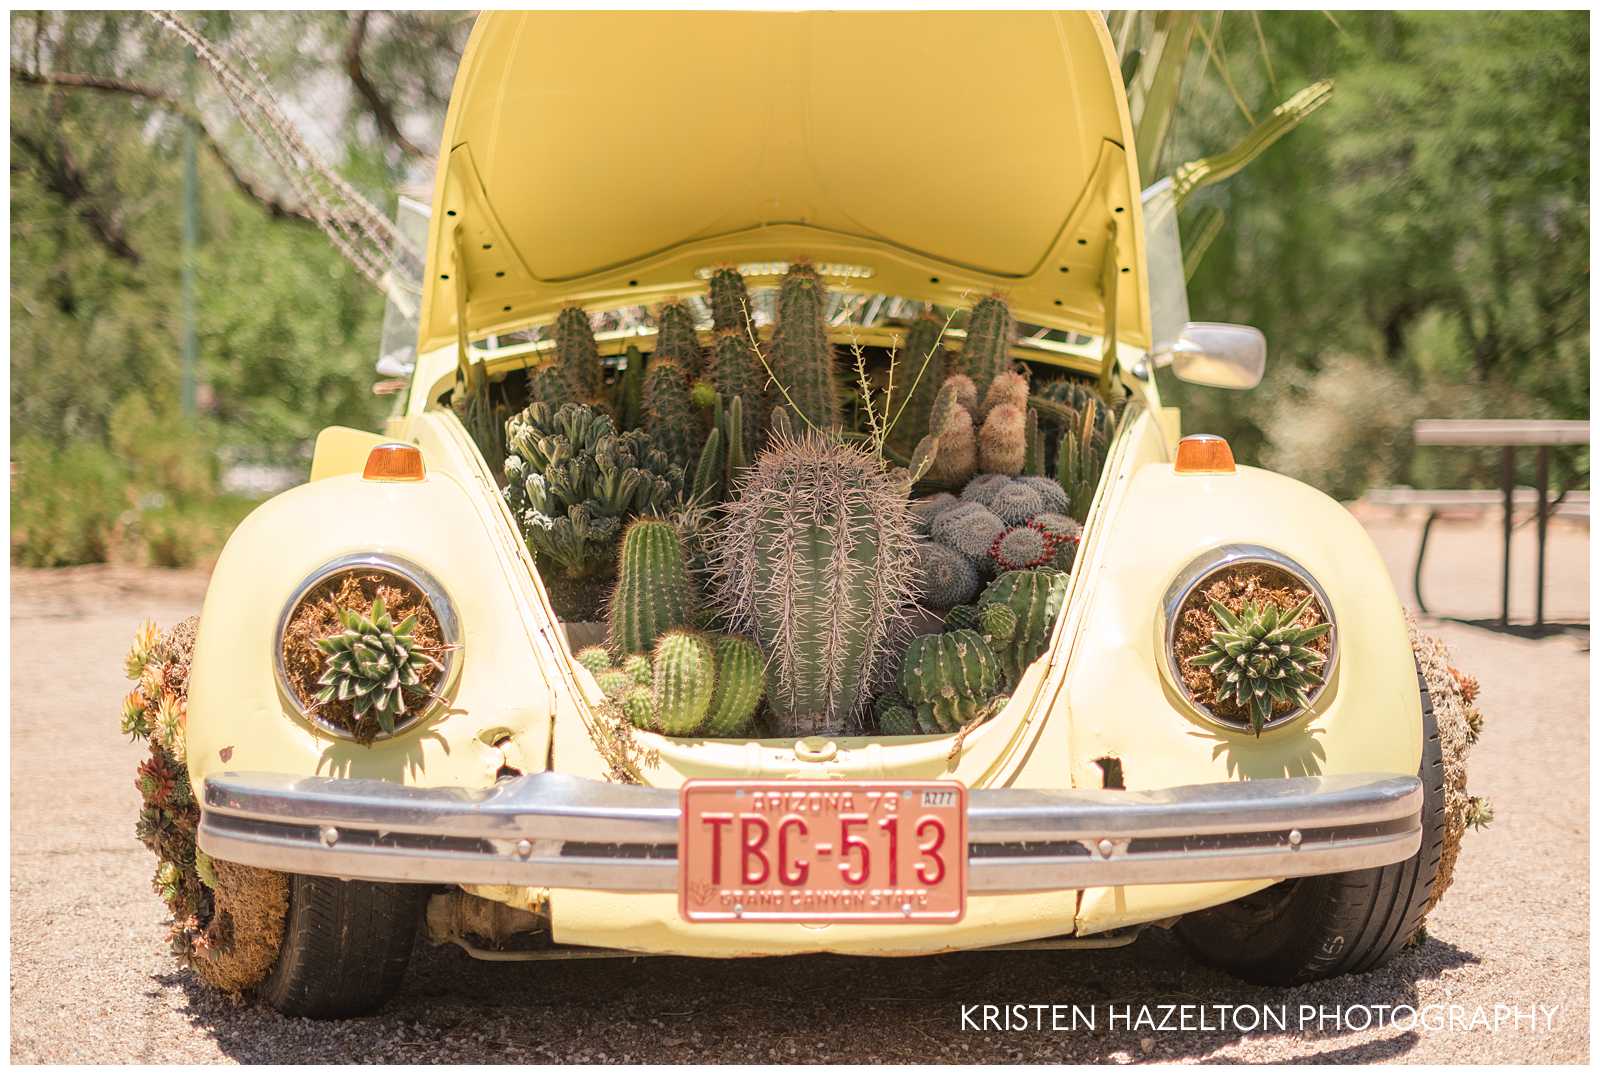 Tucson Botanical Garden's cactus car. Yellow VW bug filled with cacti